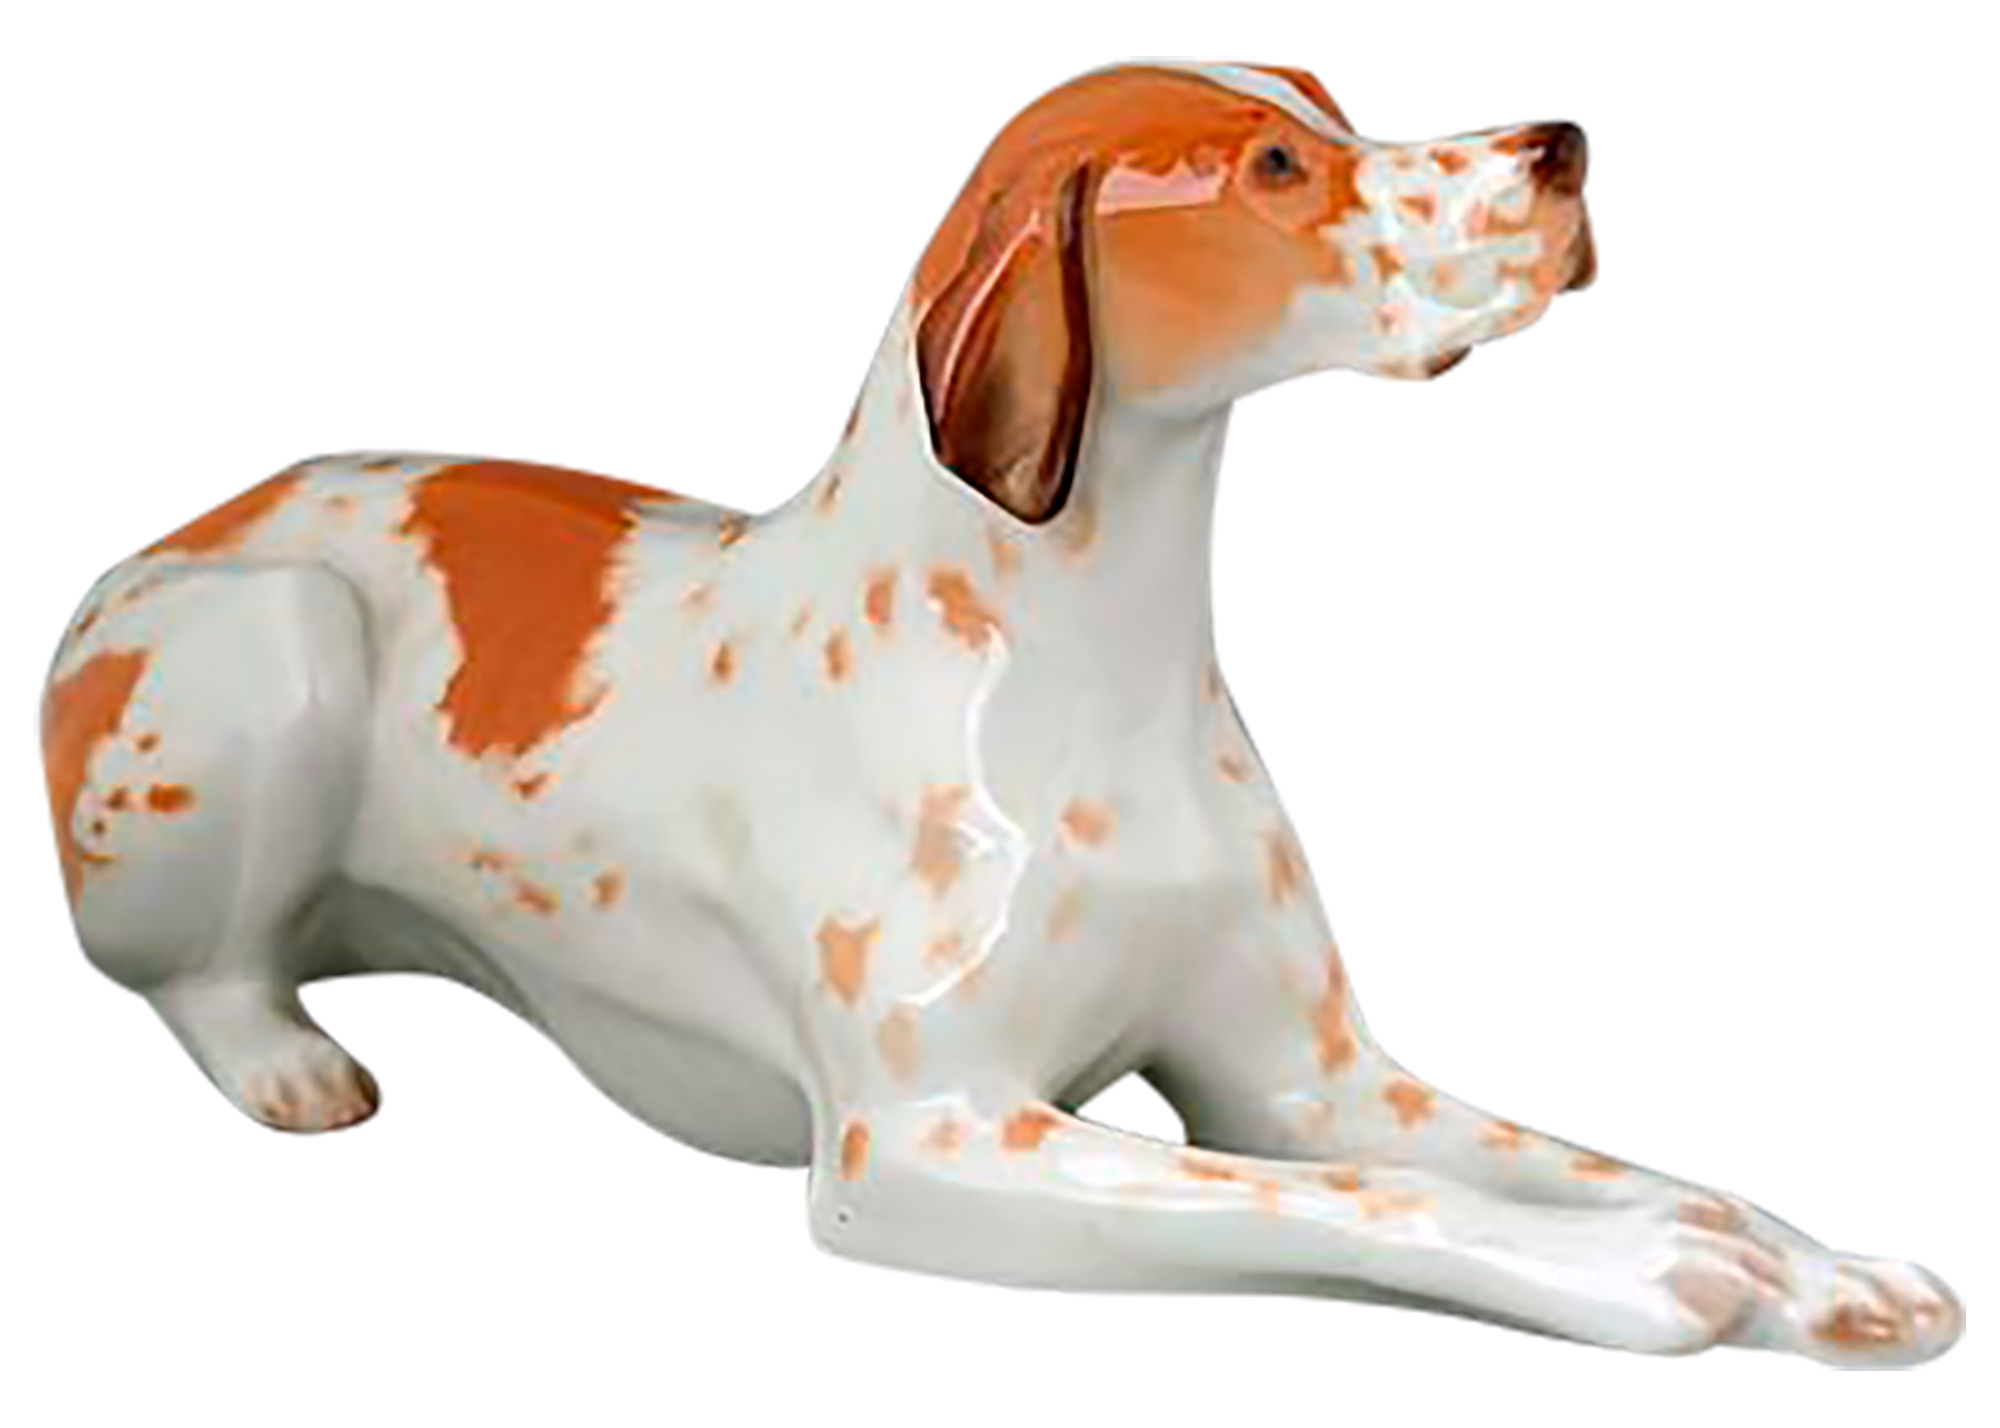 Buy Tan & White Pointer Dog Figurine at GoldenCockerel.com